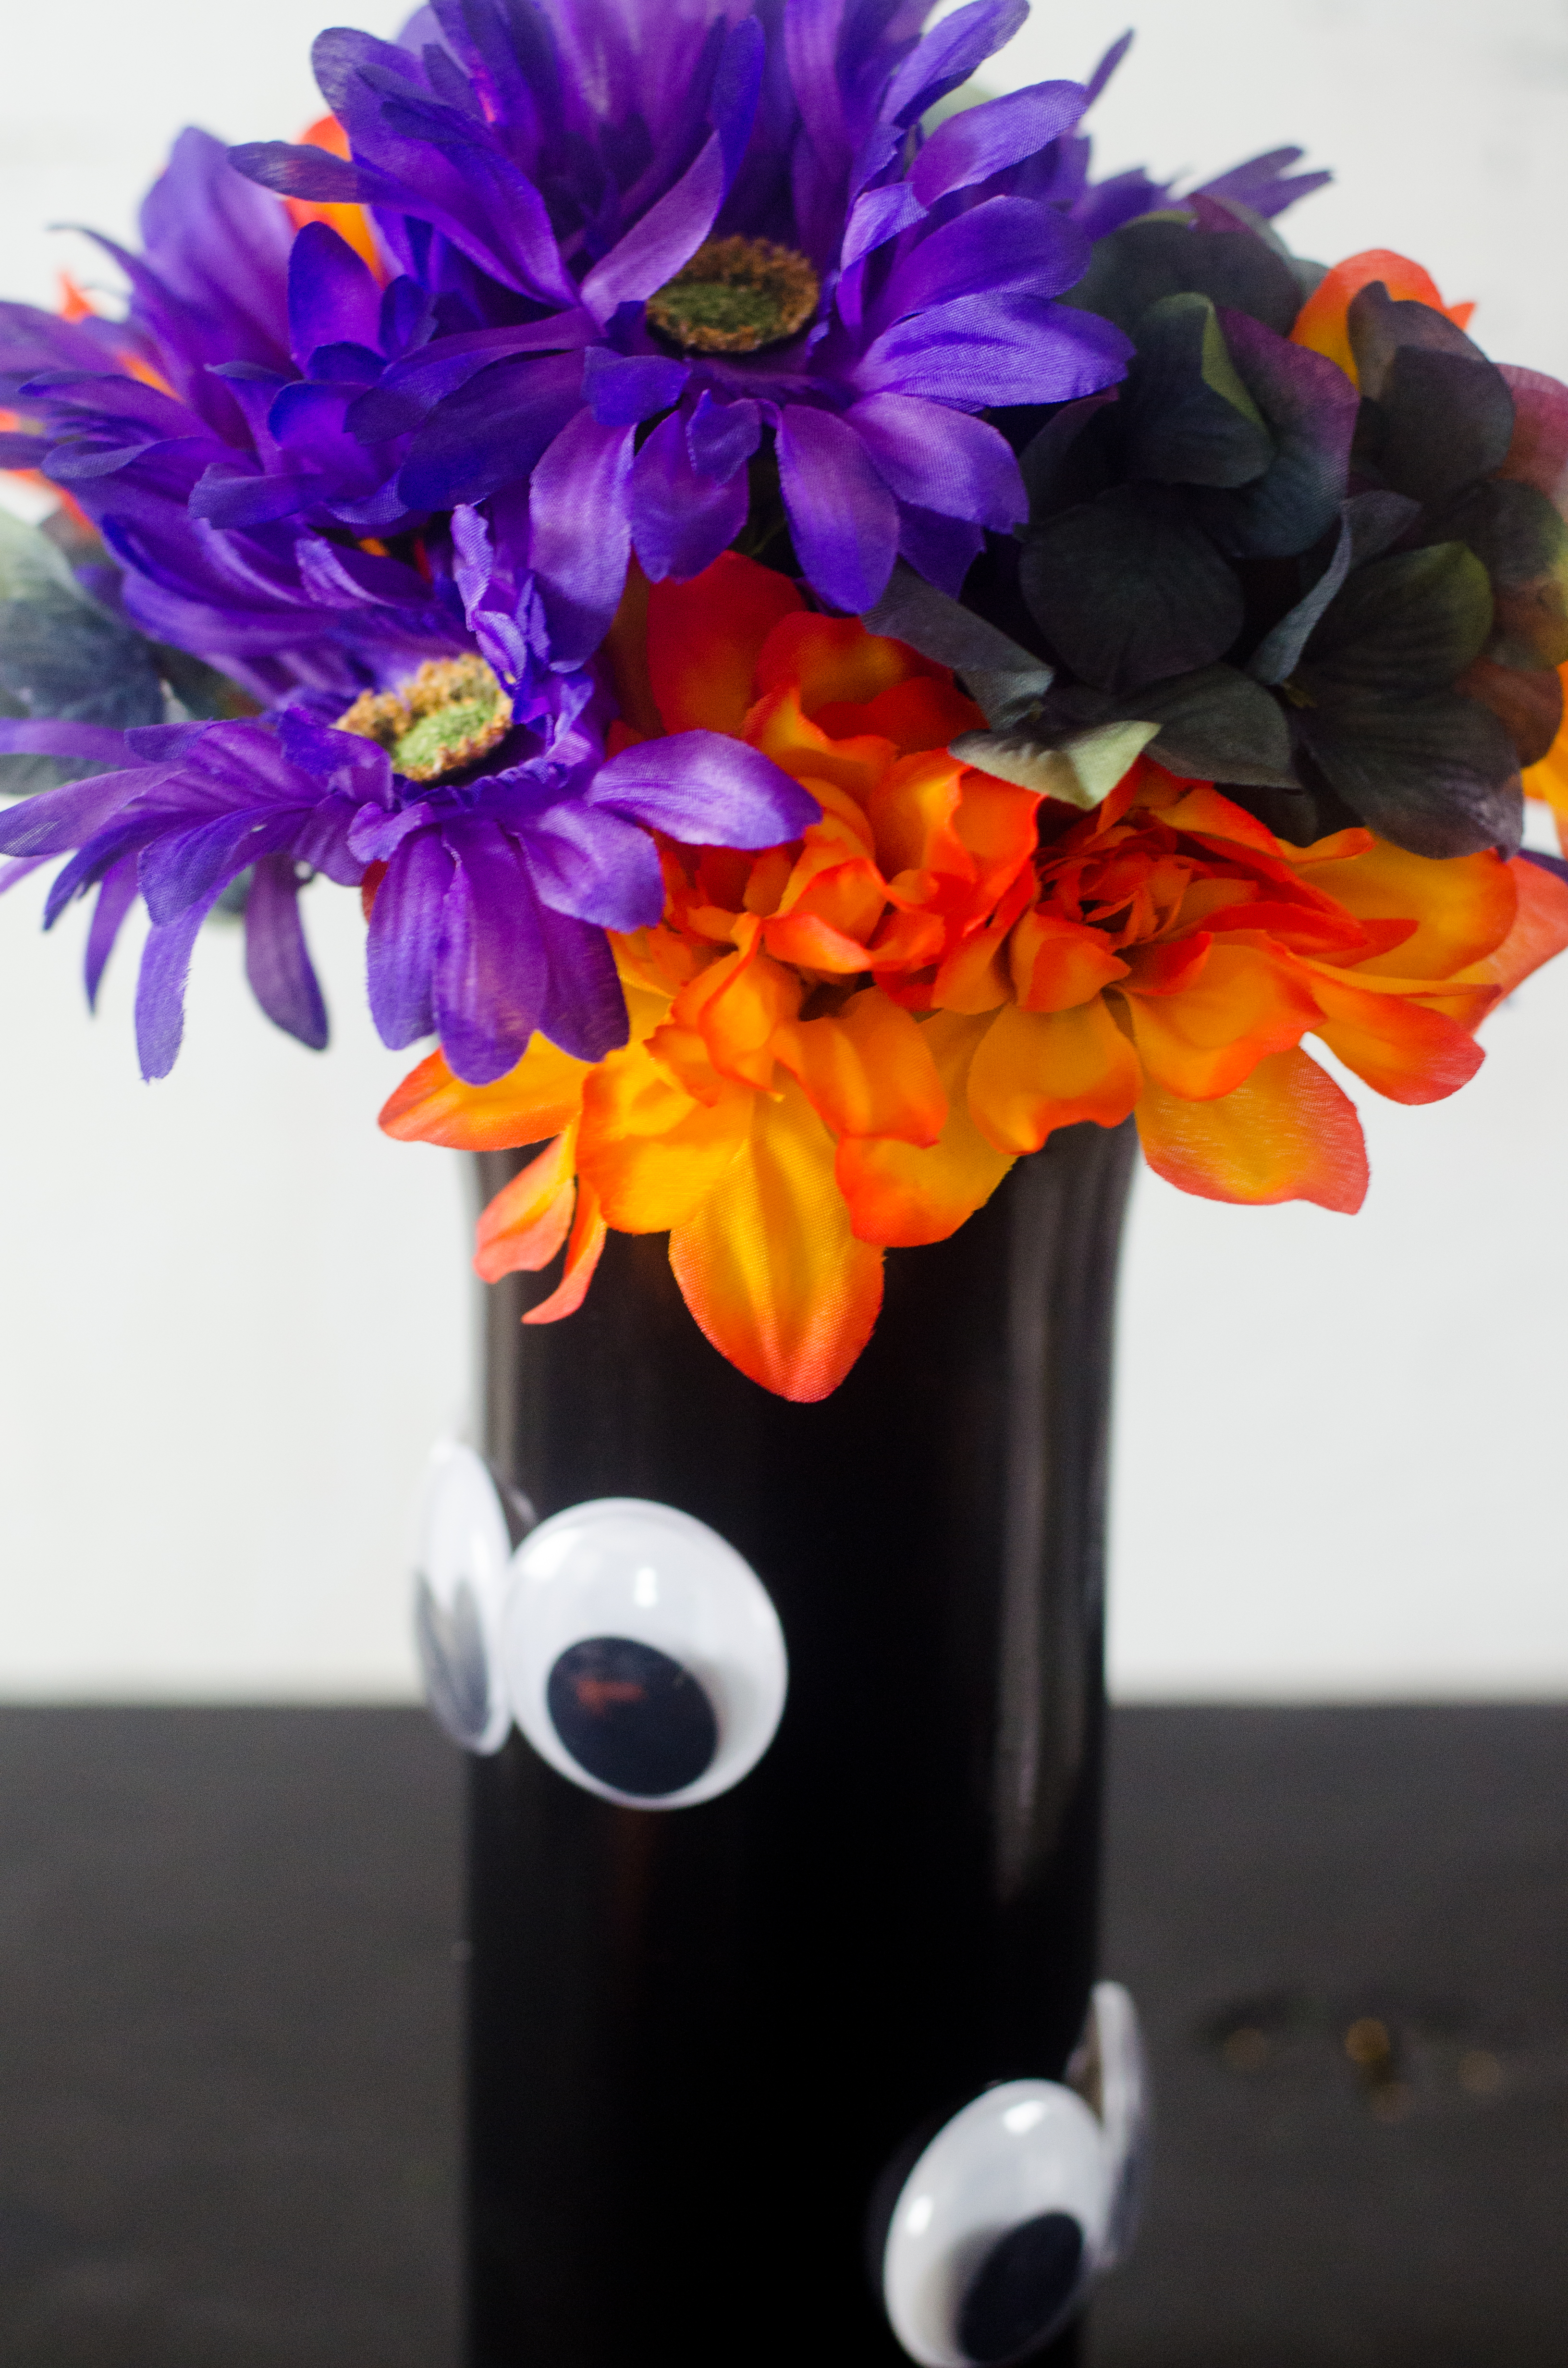 DIY Googly Eye Vase for Halloween